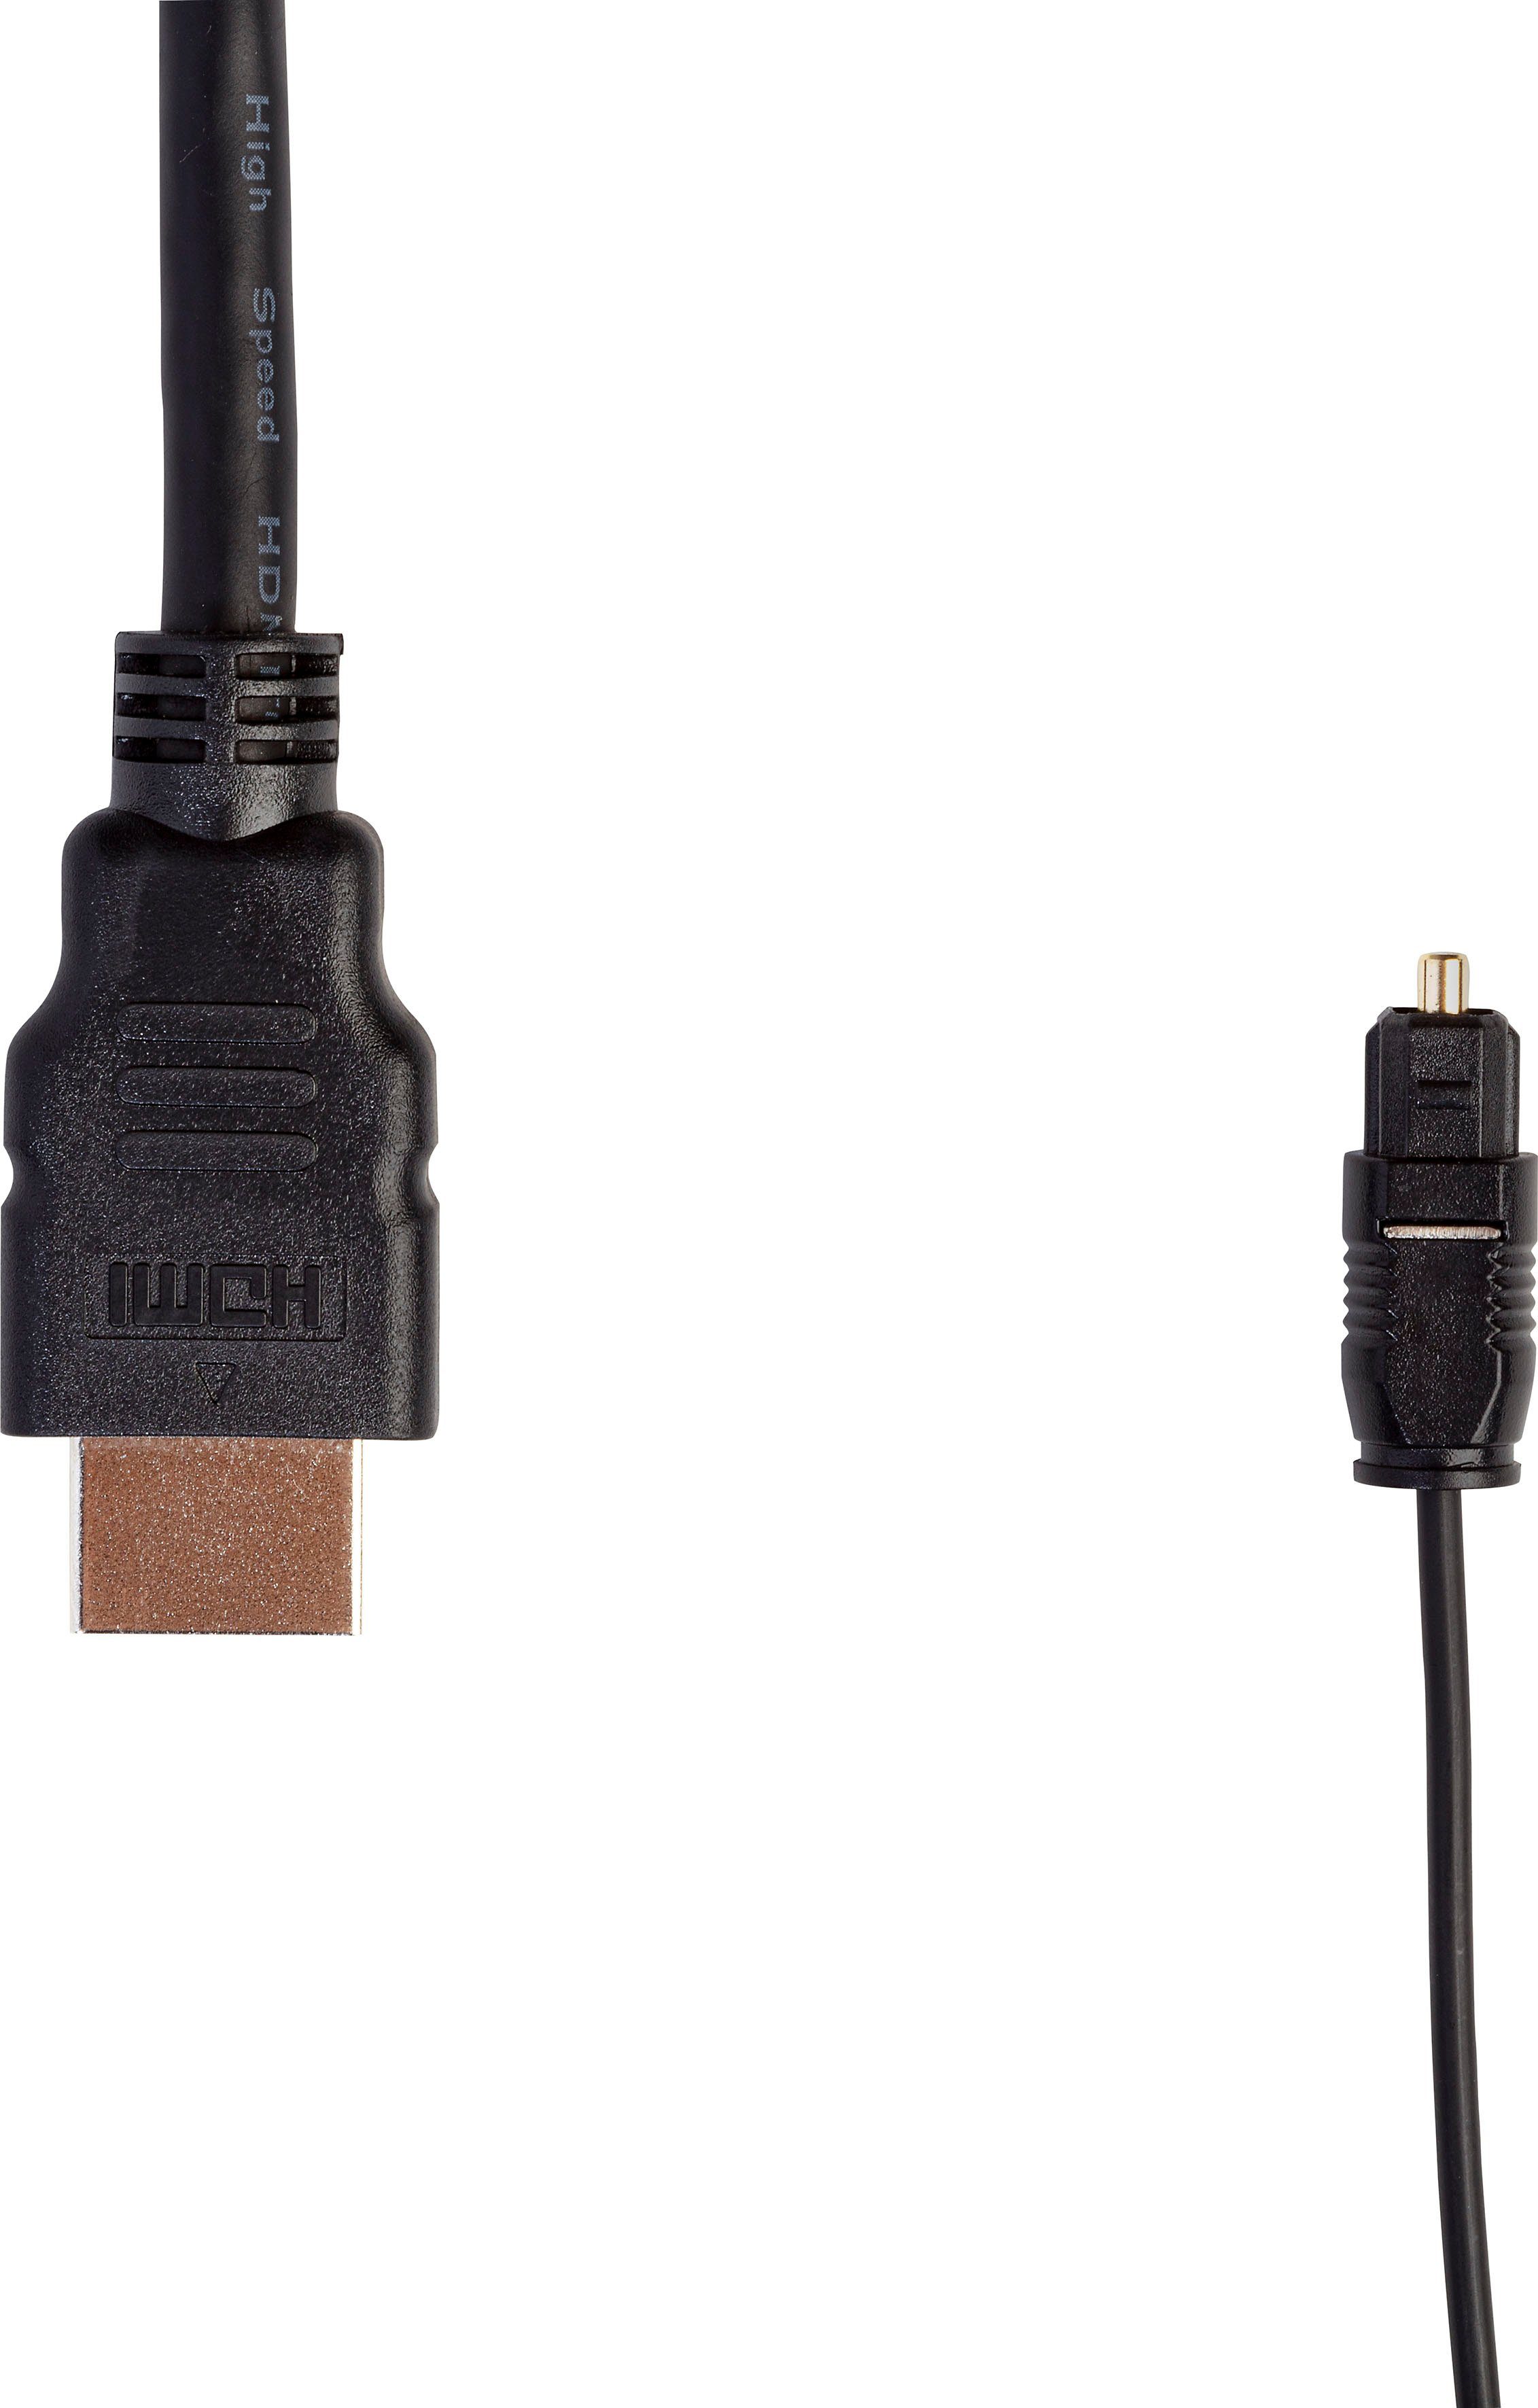 (Bluetooth, Soundbar Subwoofer, Chromecast, kabelloser ARC) DHT-S416 Denon 2.1 HDMI